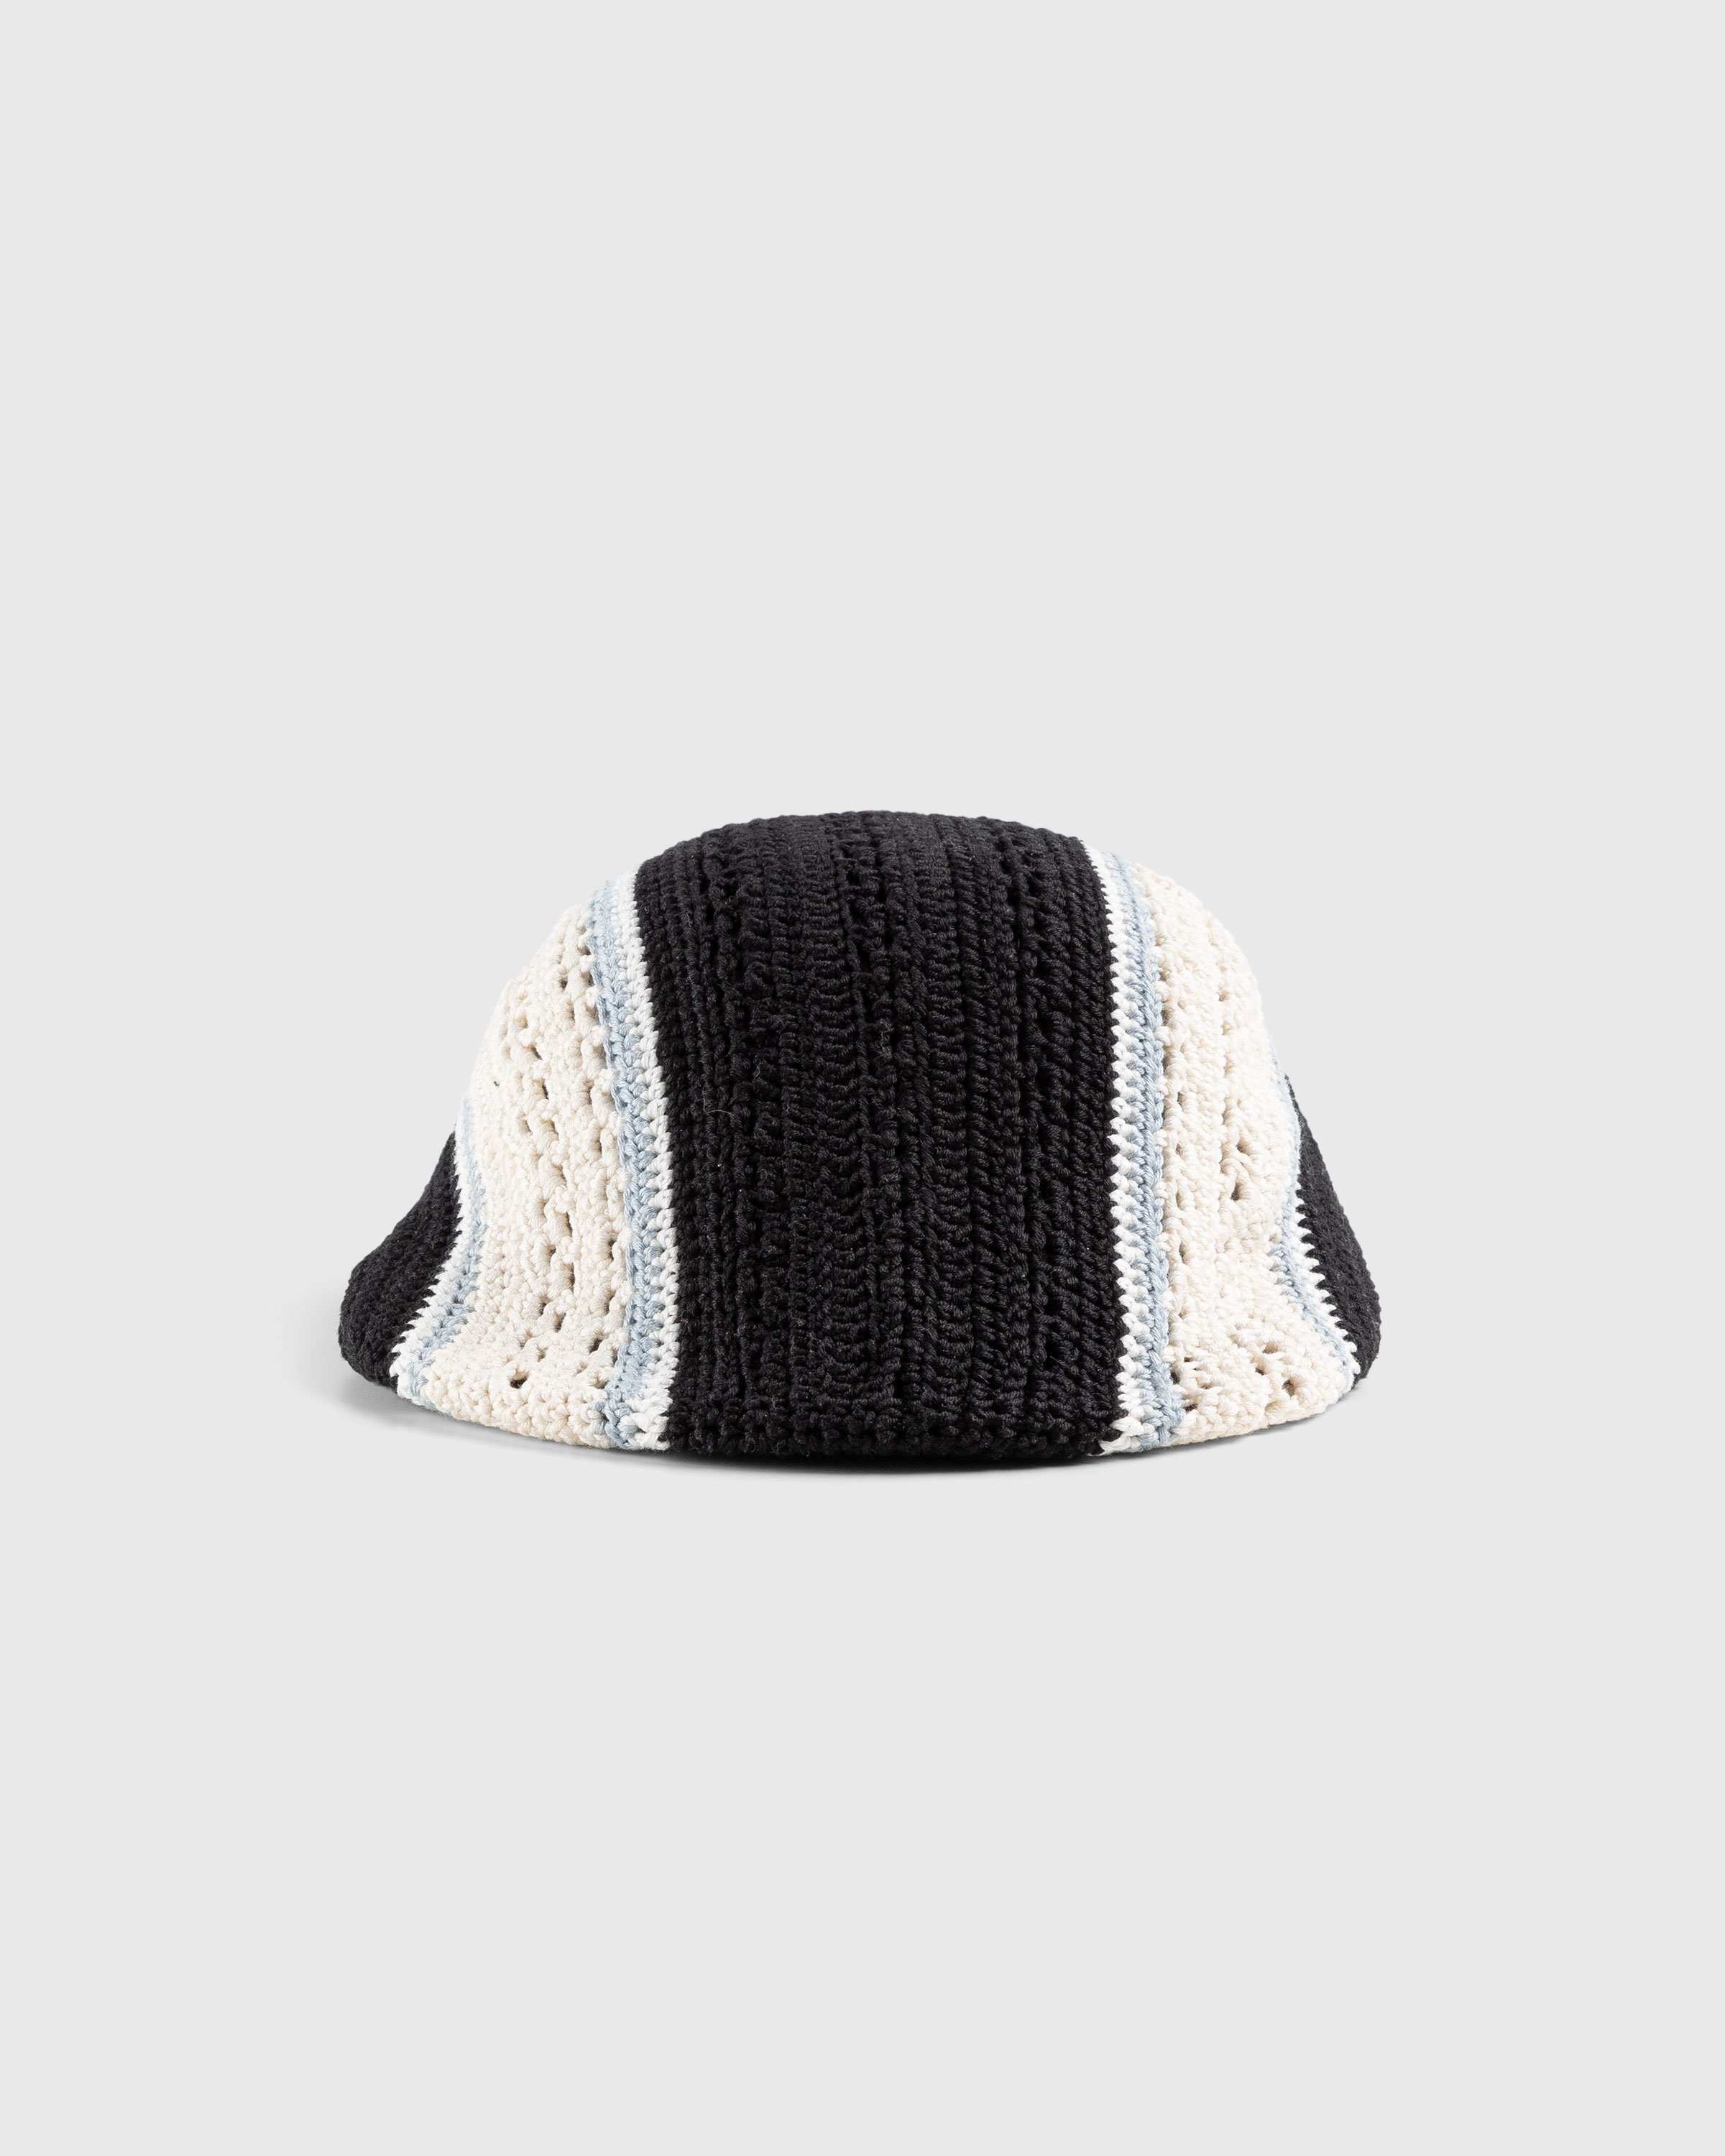 SSU – Crochet Flat Hat Black/Ivory - Flat Caps - Black - Image 2